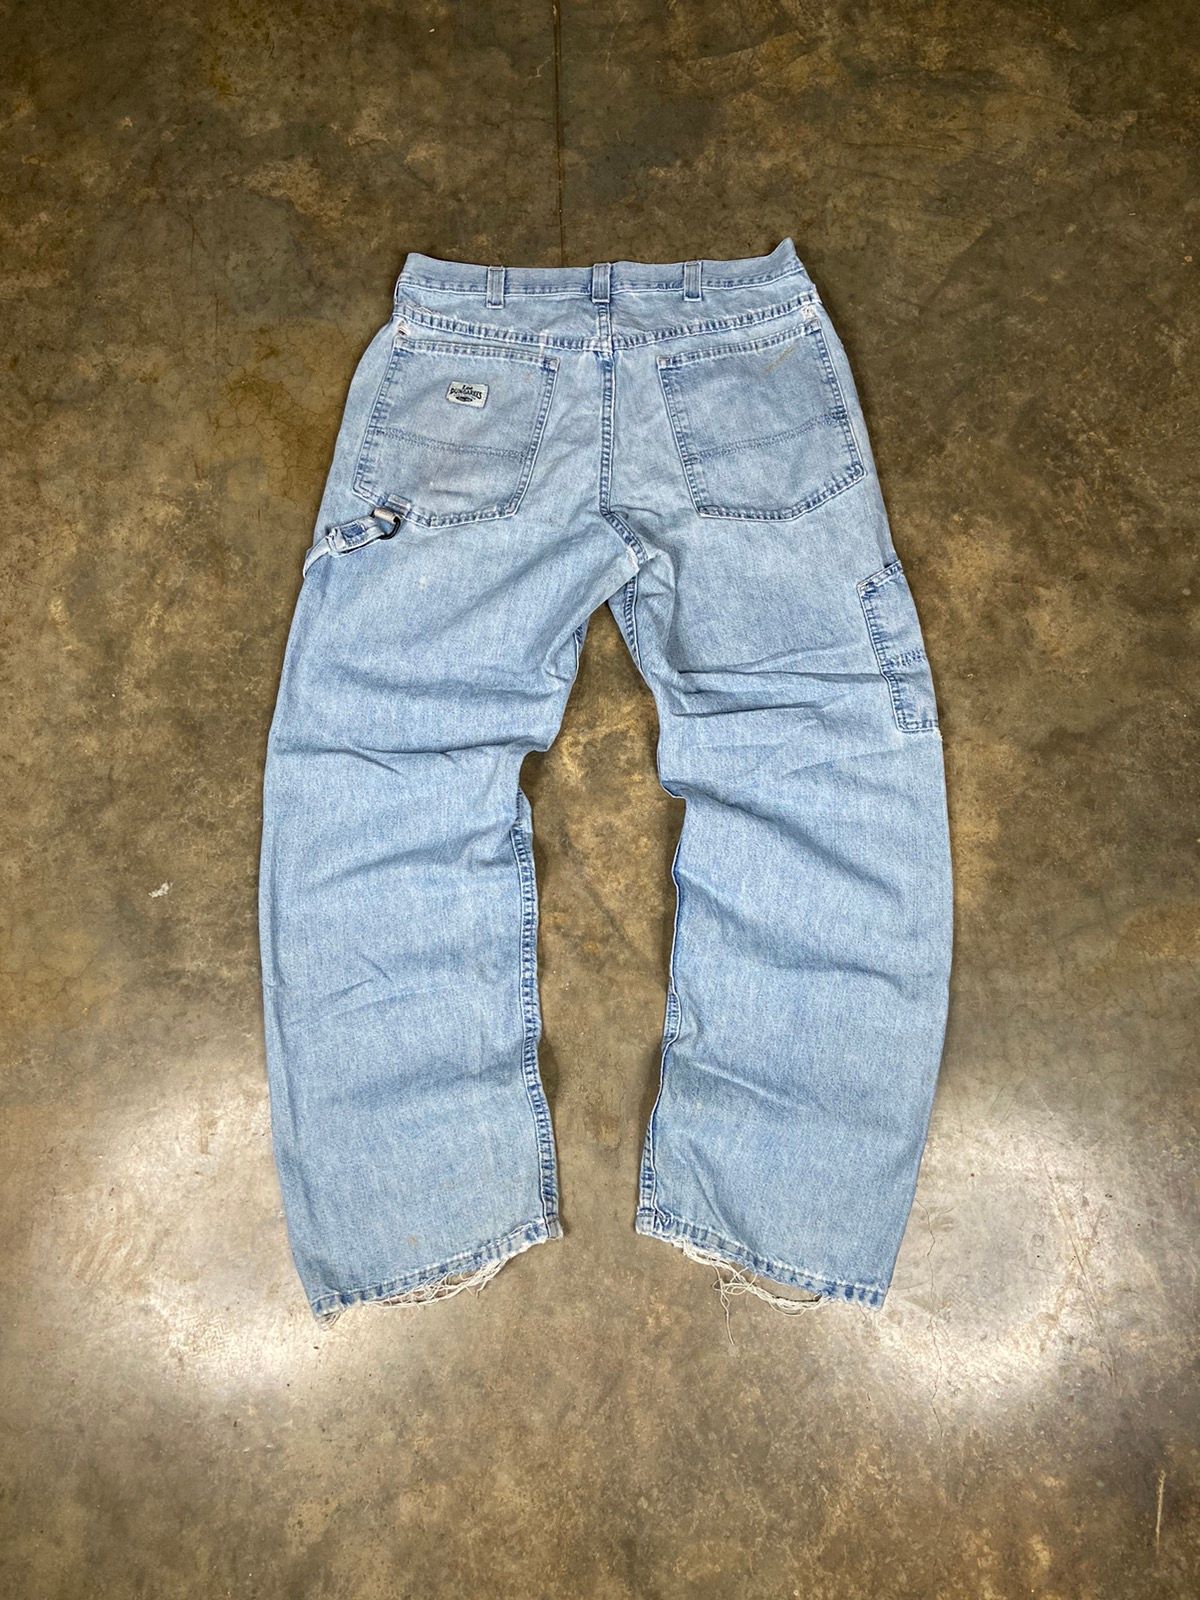 Vintage Crazy Vintage Thrashed Faded Baggy Skater Jnco Style Jeans Size US 36 / EU 52 - 1 Preview